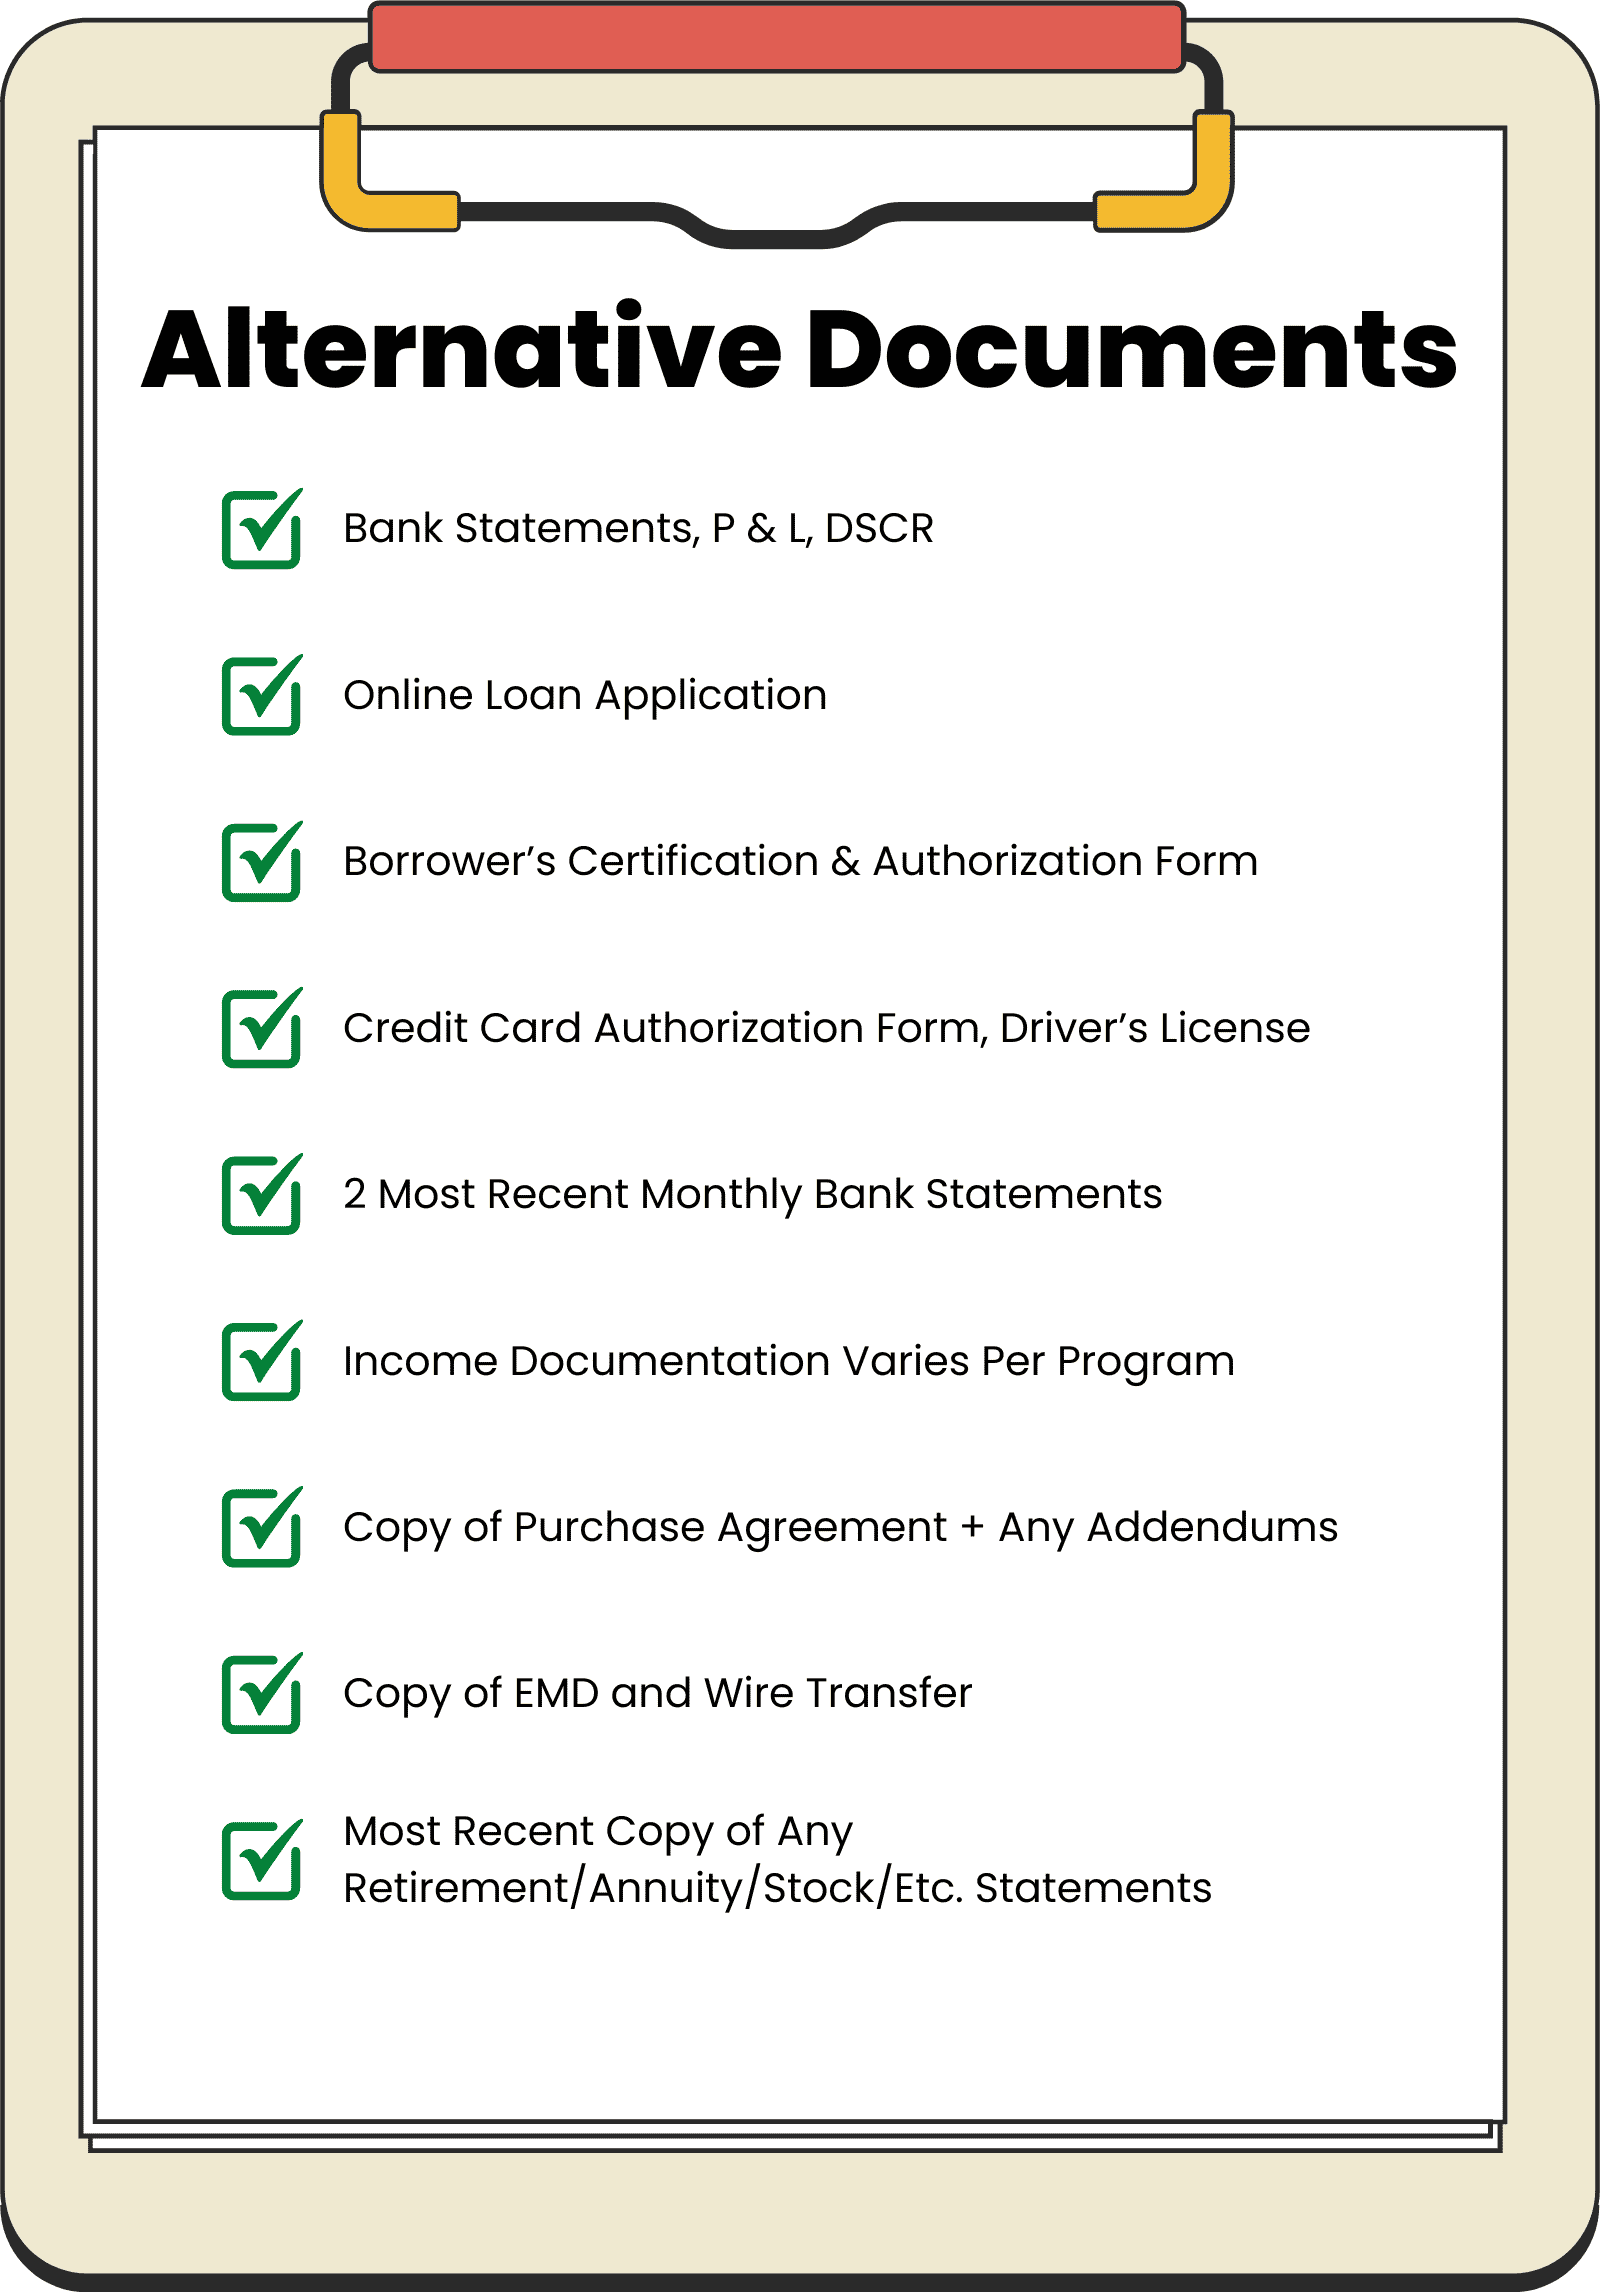 Alternative Documentation for Residential property